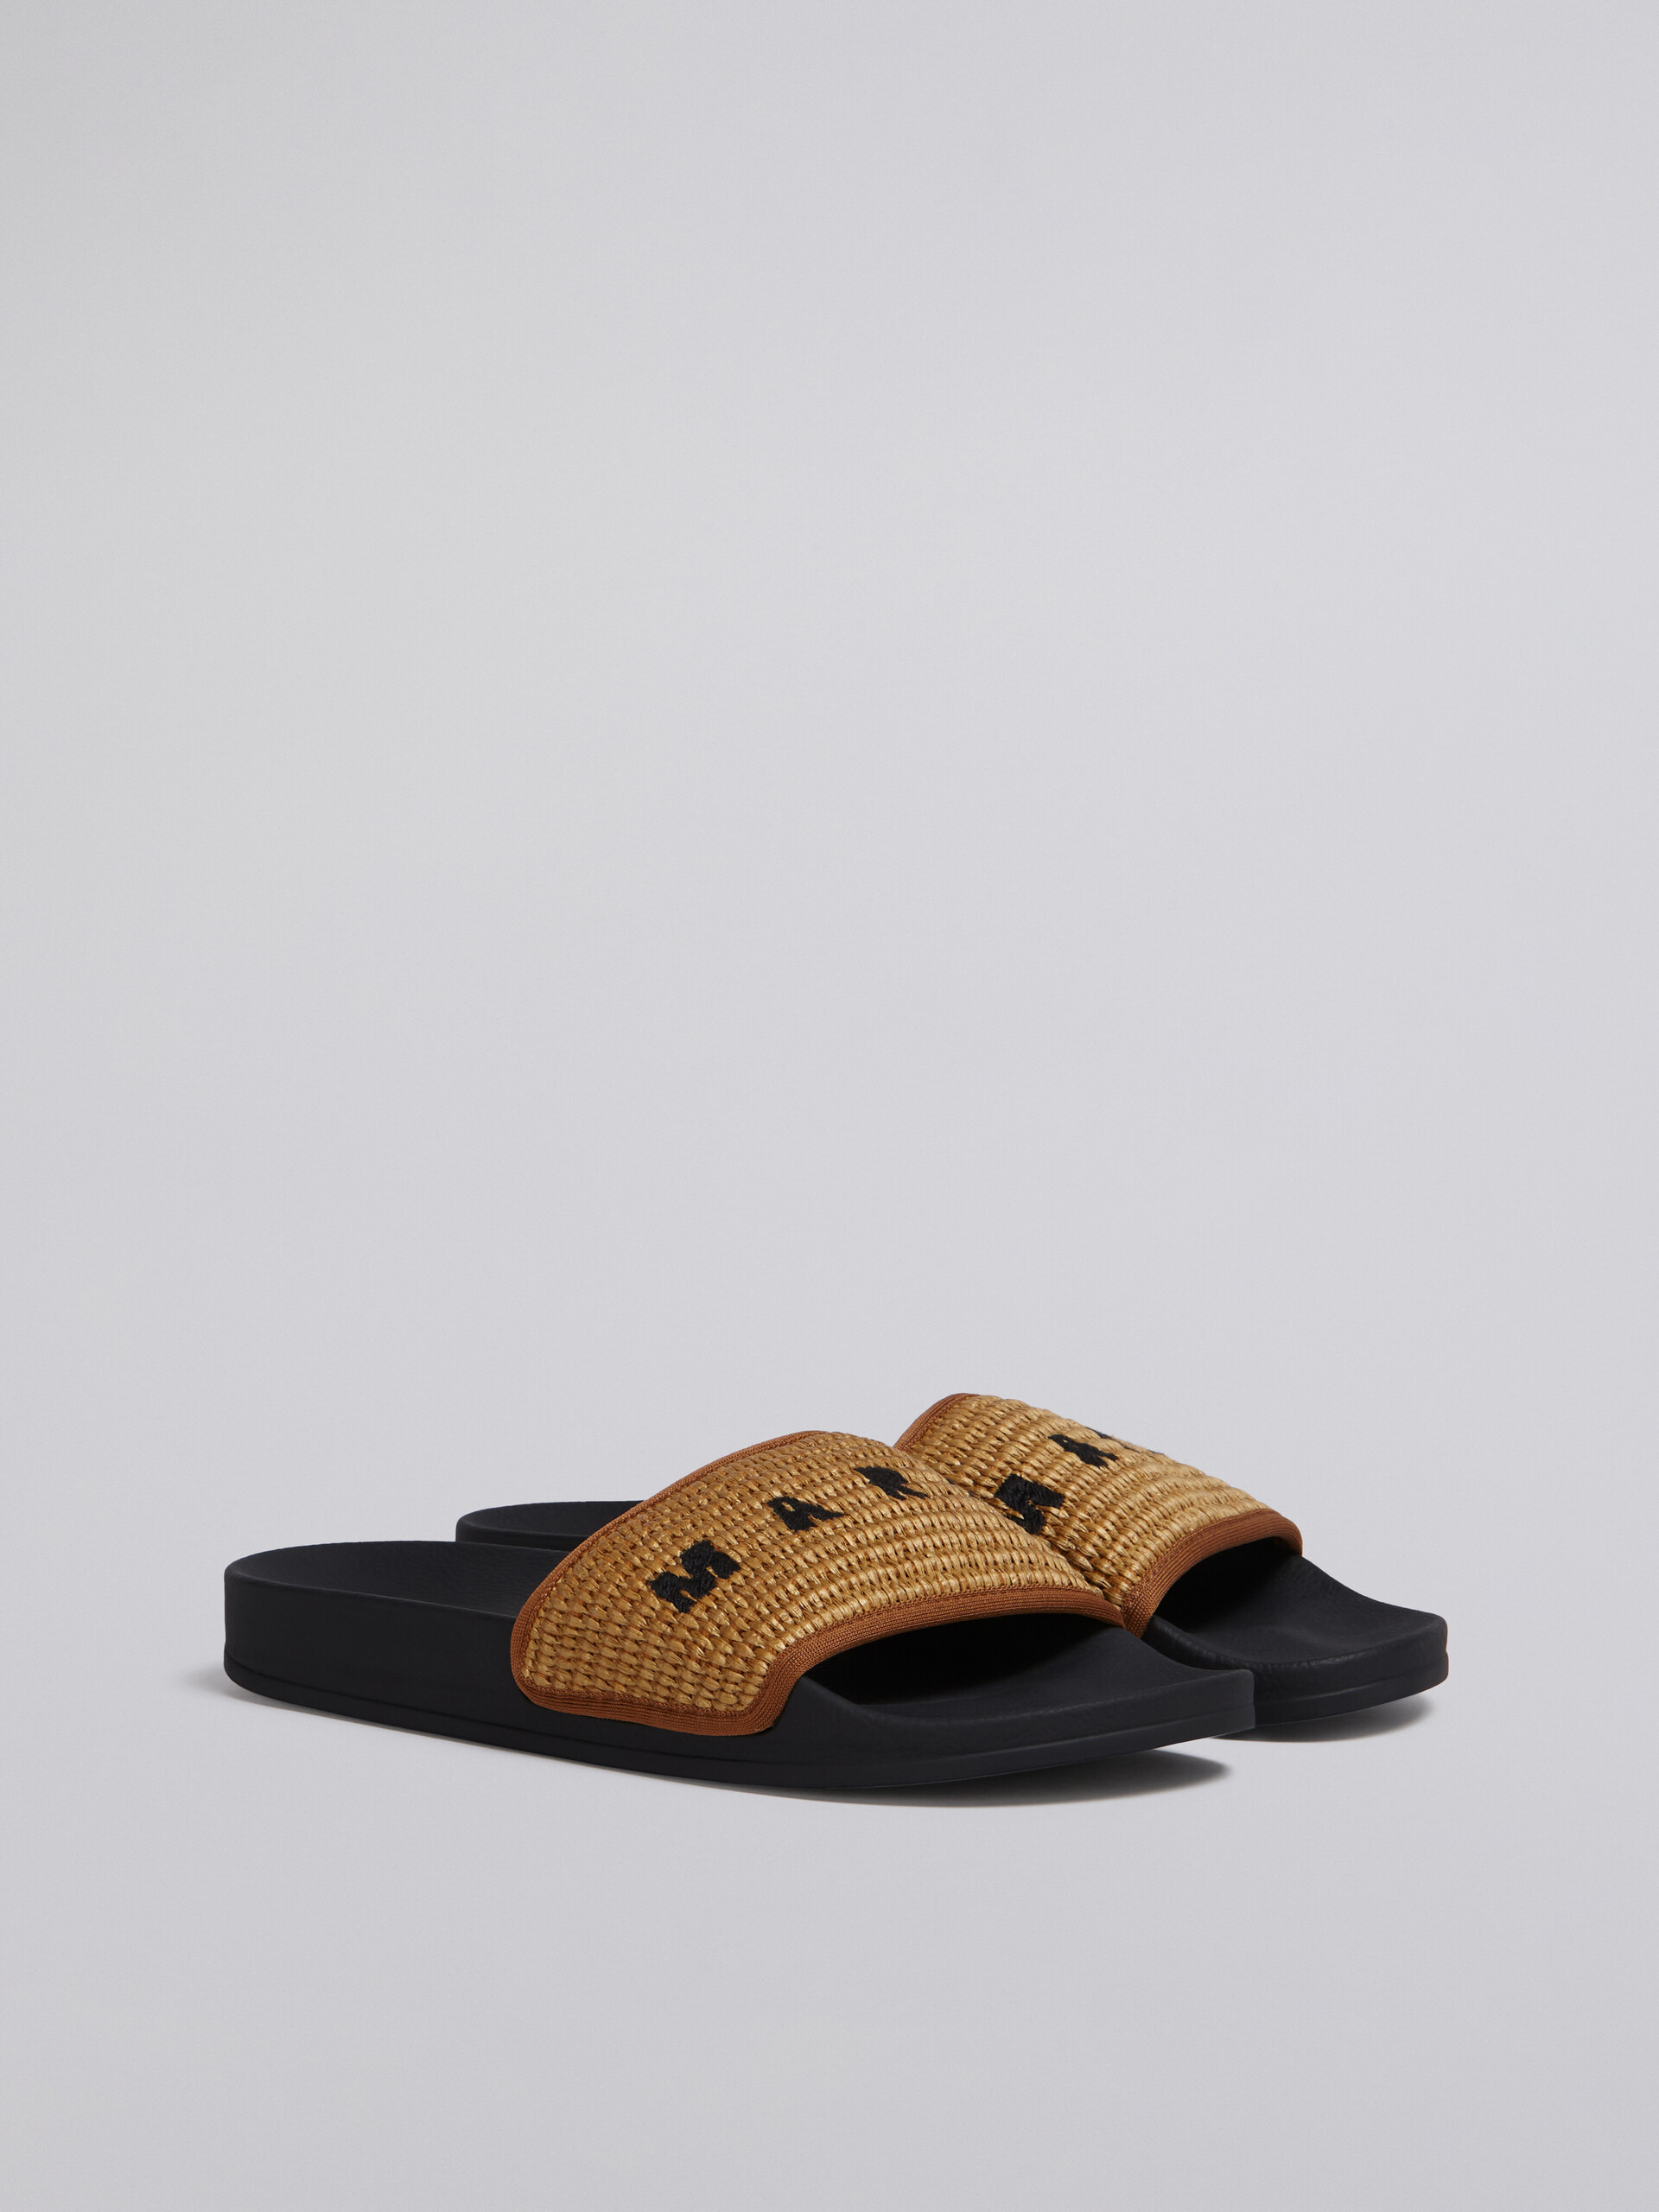 Brown raffia sandal - Sandals - Image 2